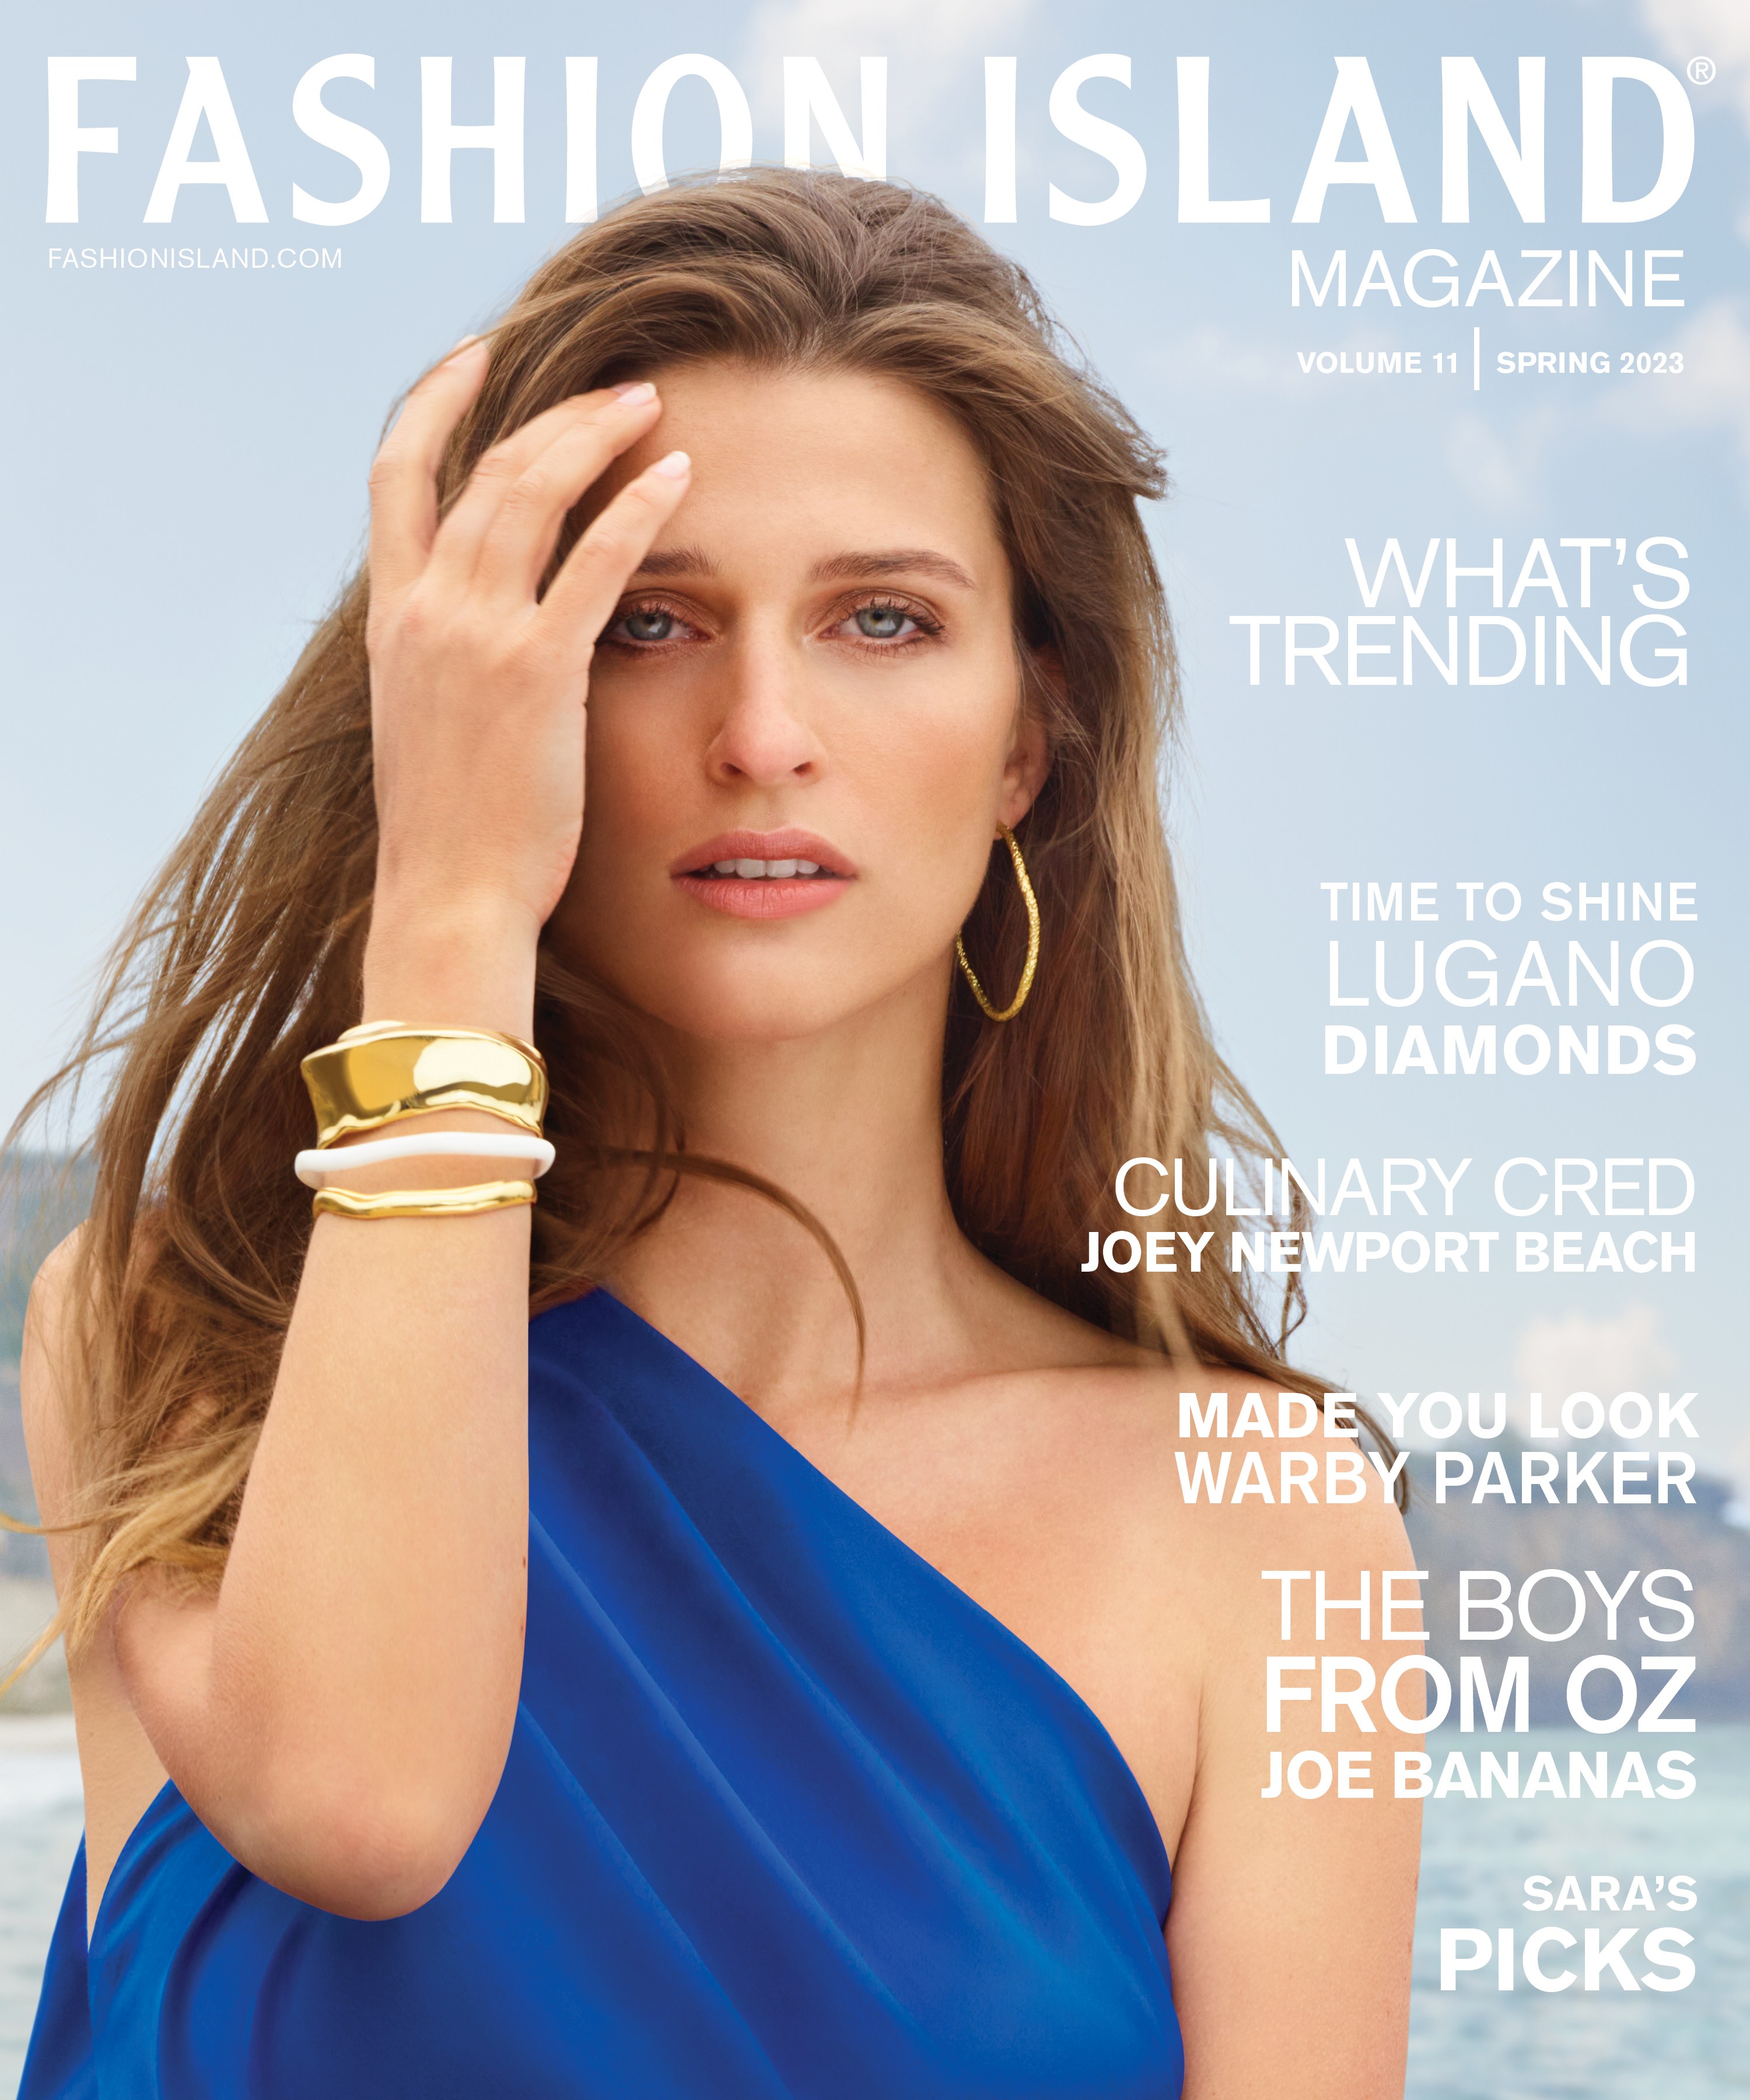 Fashion Island Magazine Volume 11